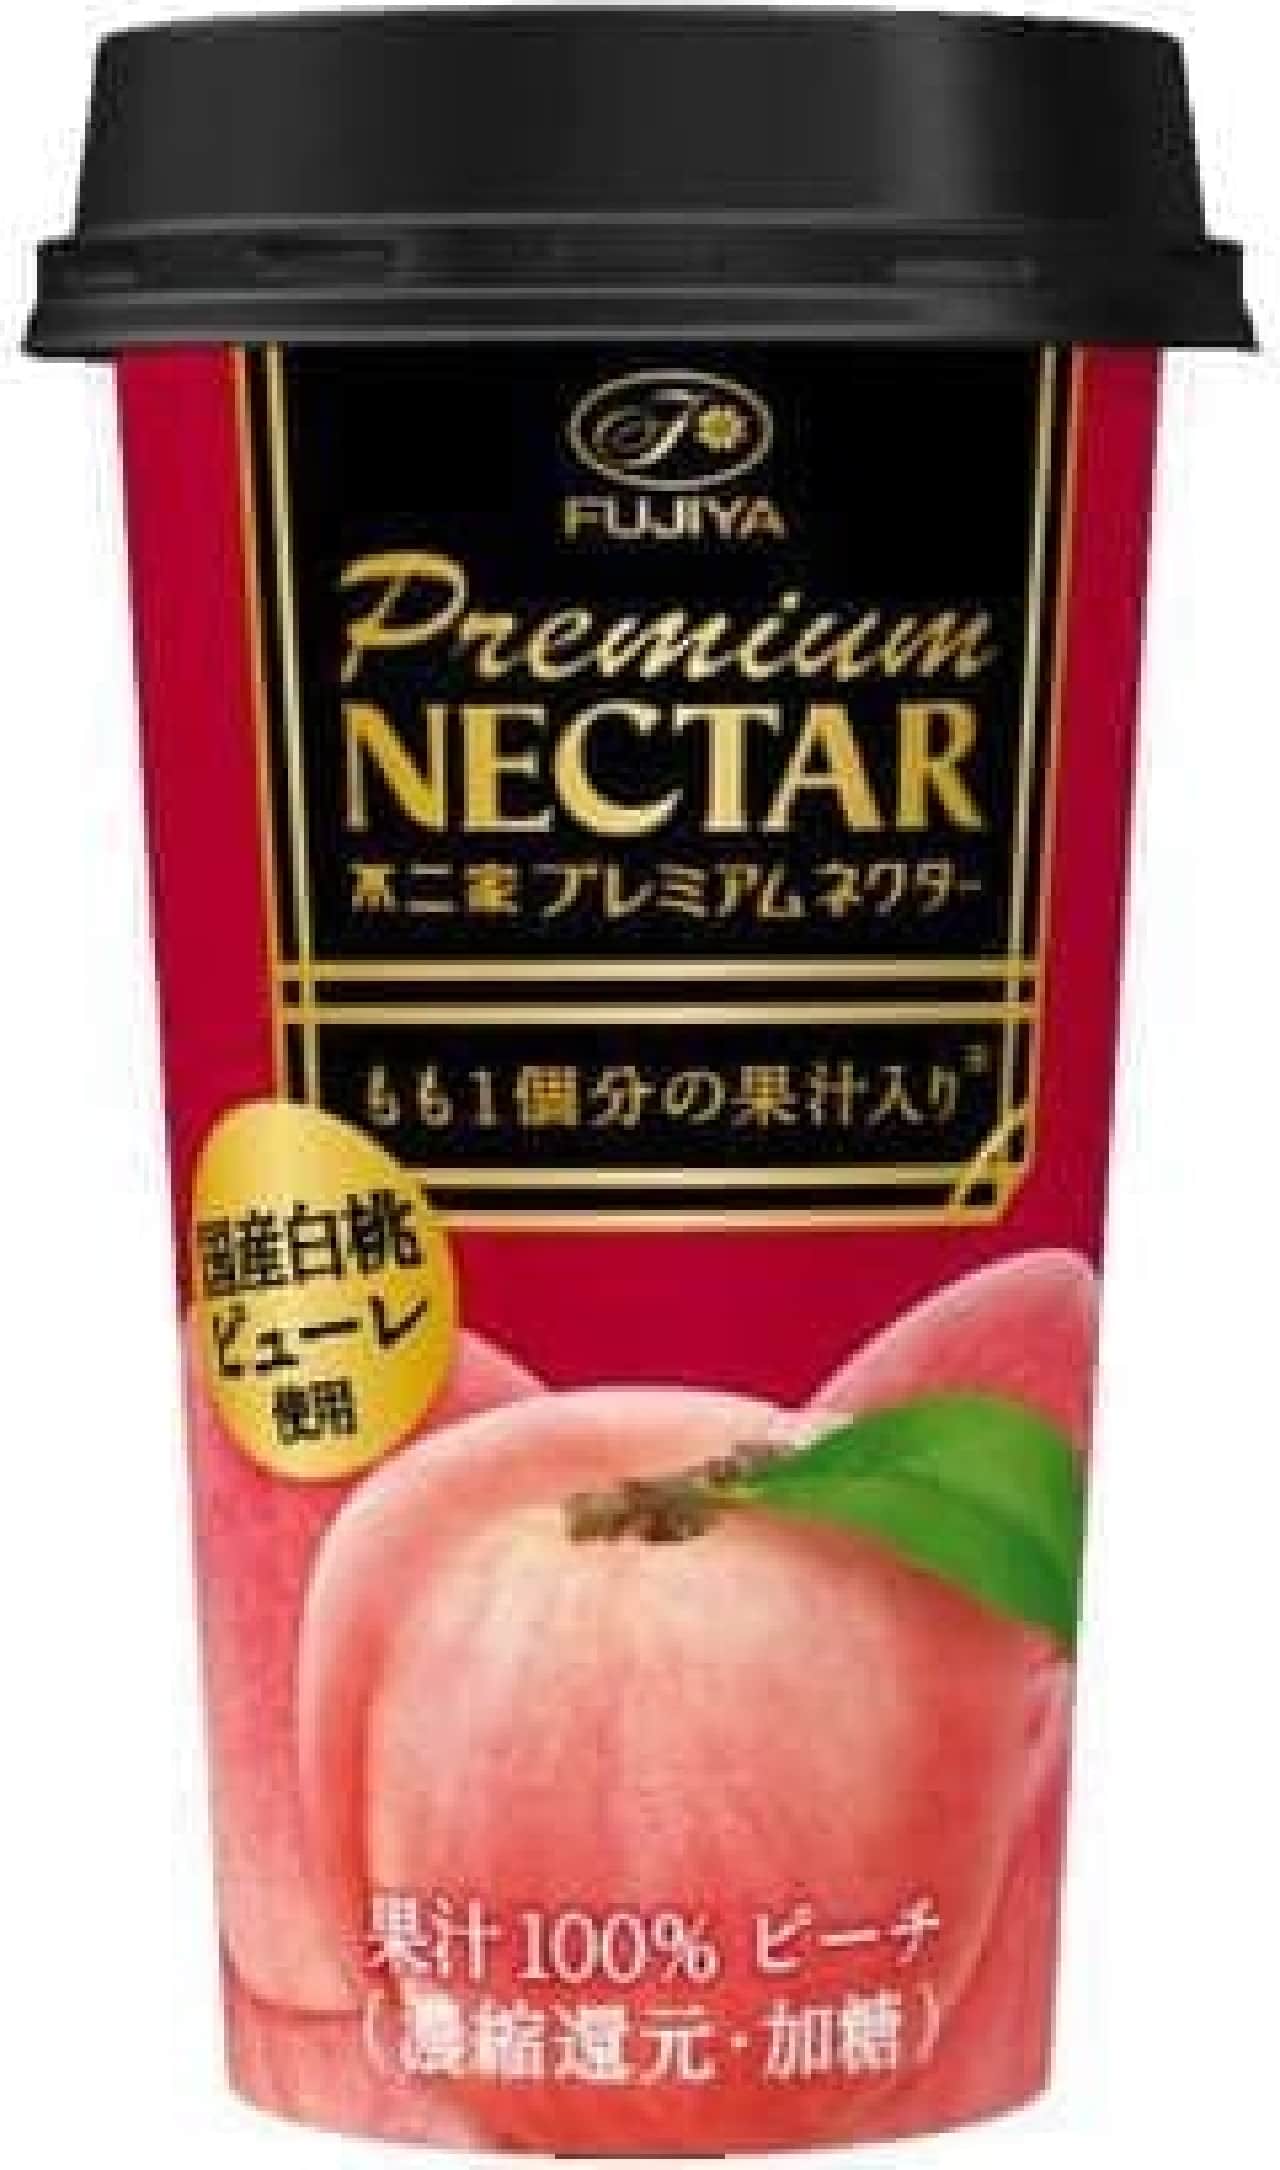 Contains "1 peach" juice! Luxury Fujiya "Premium Nectar"